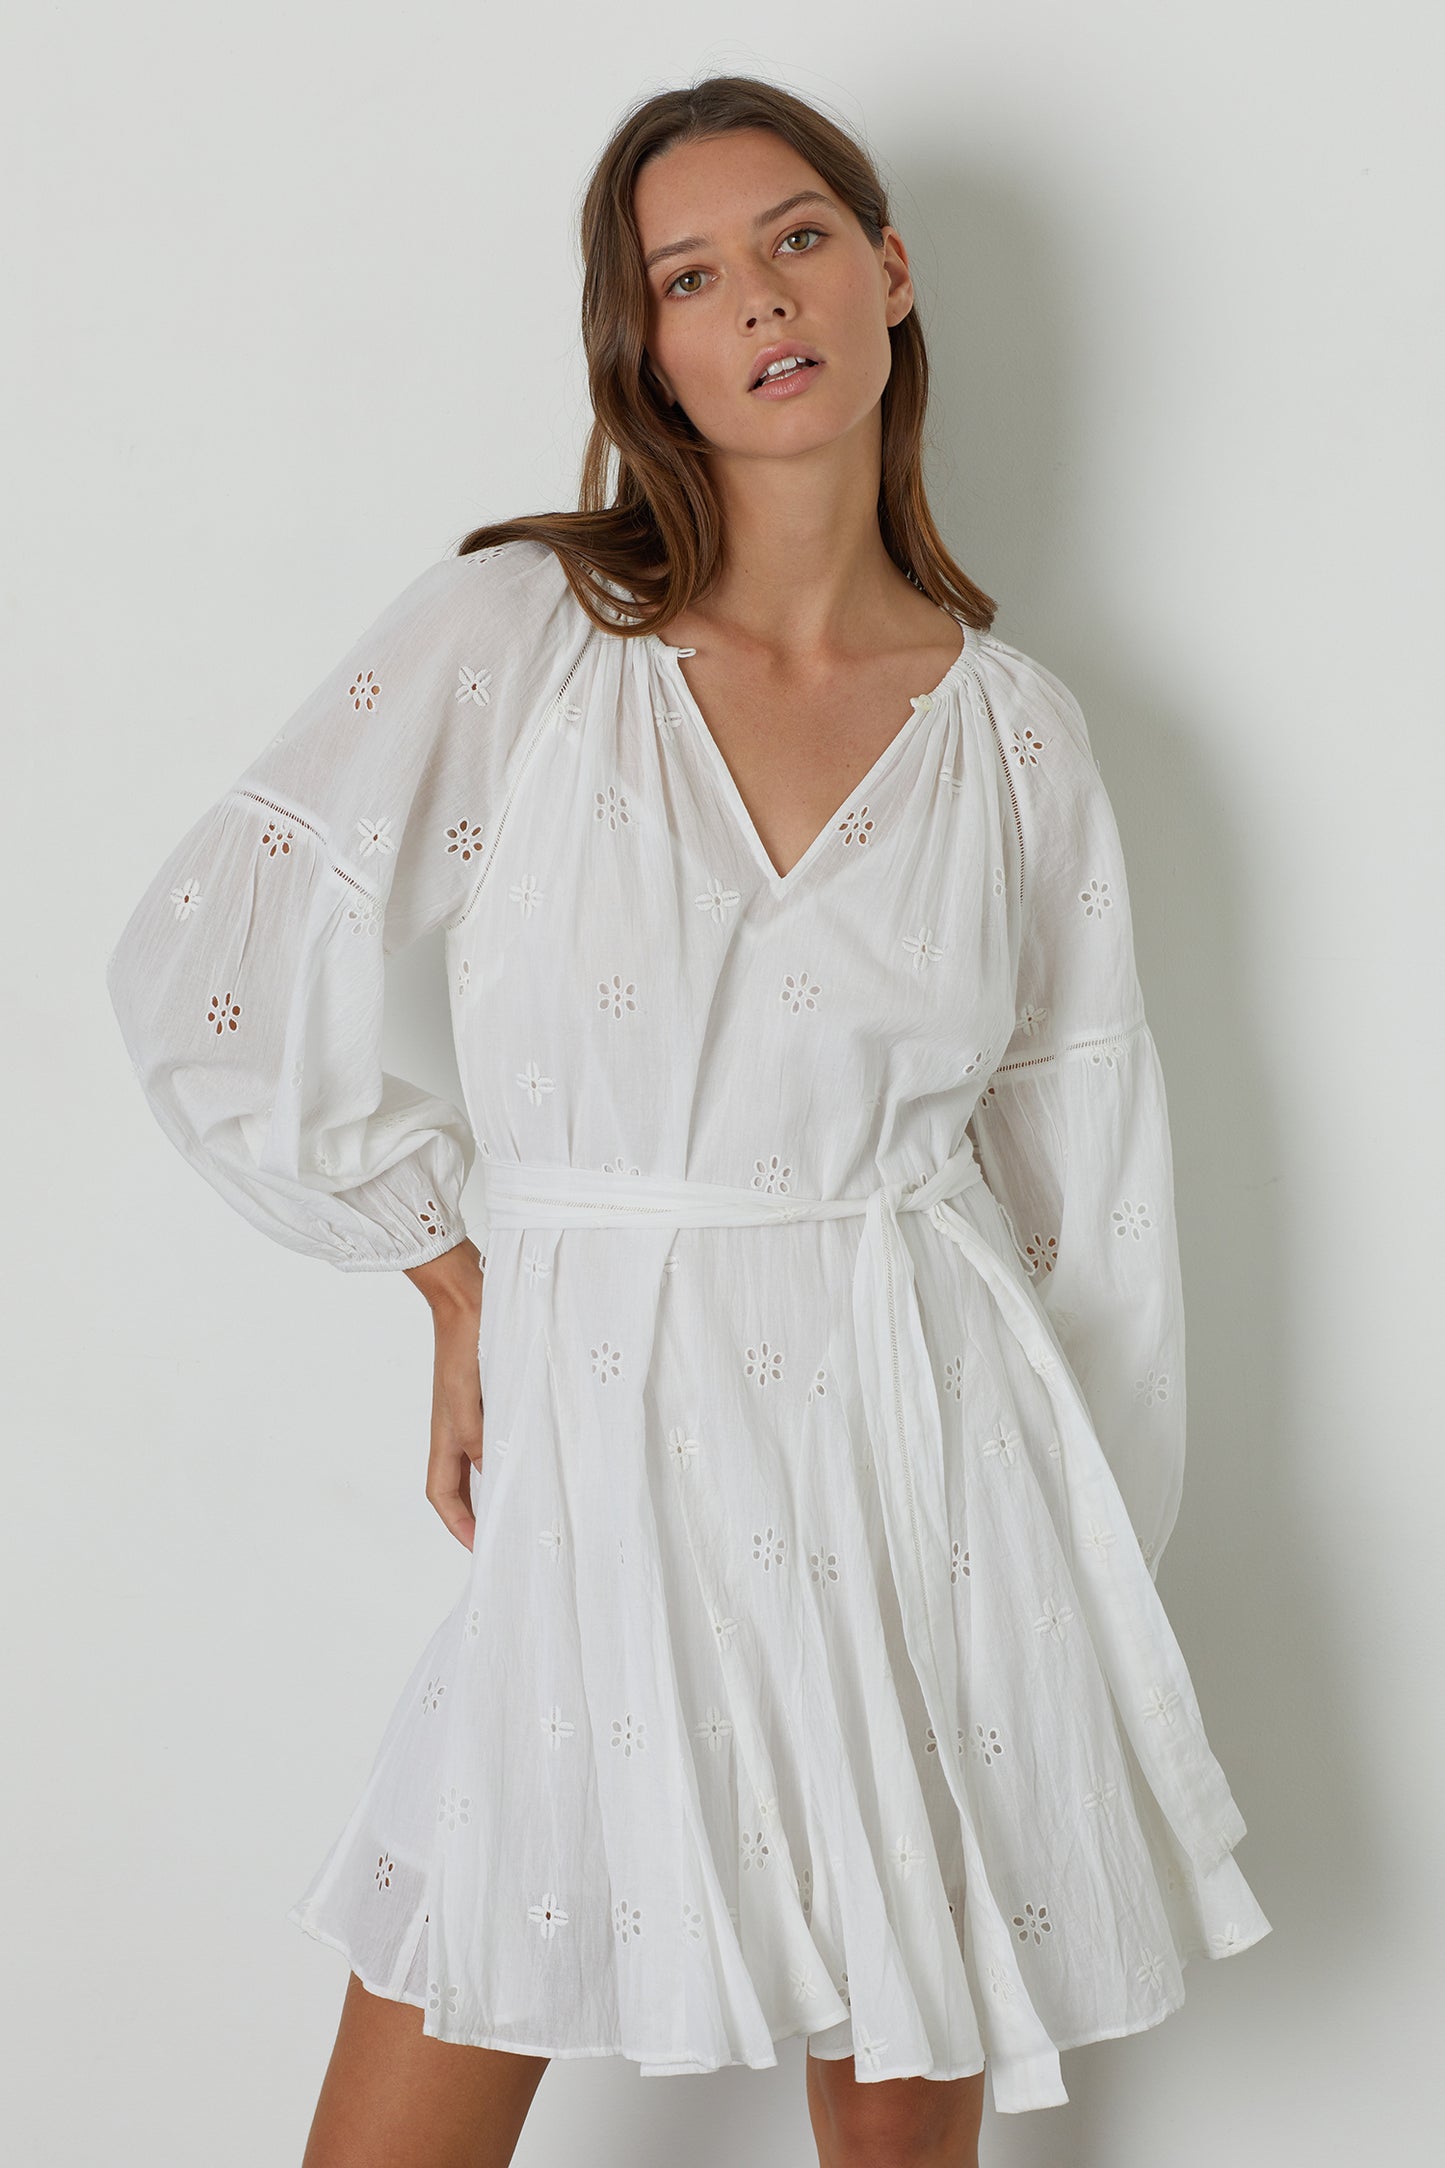 GRACIE COTTON EYELET DRESS IN WHITE